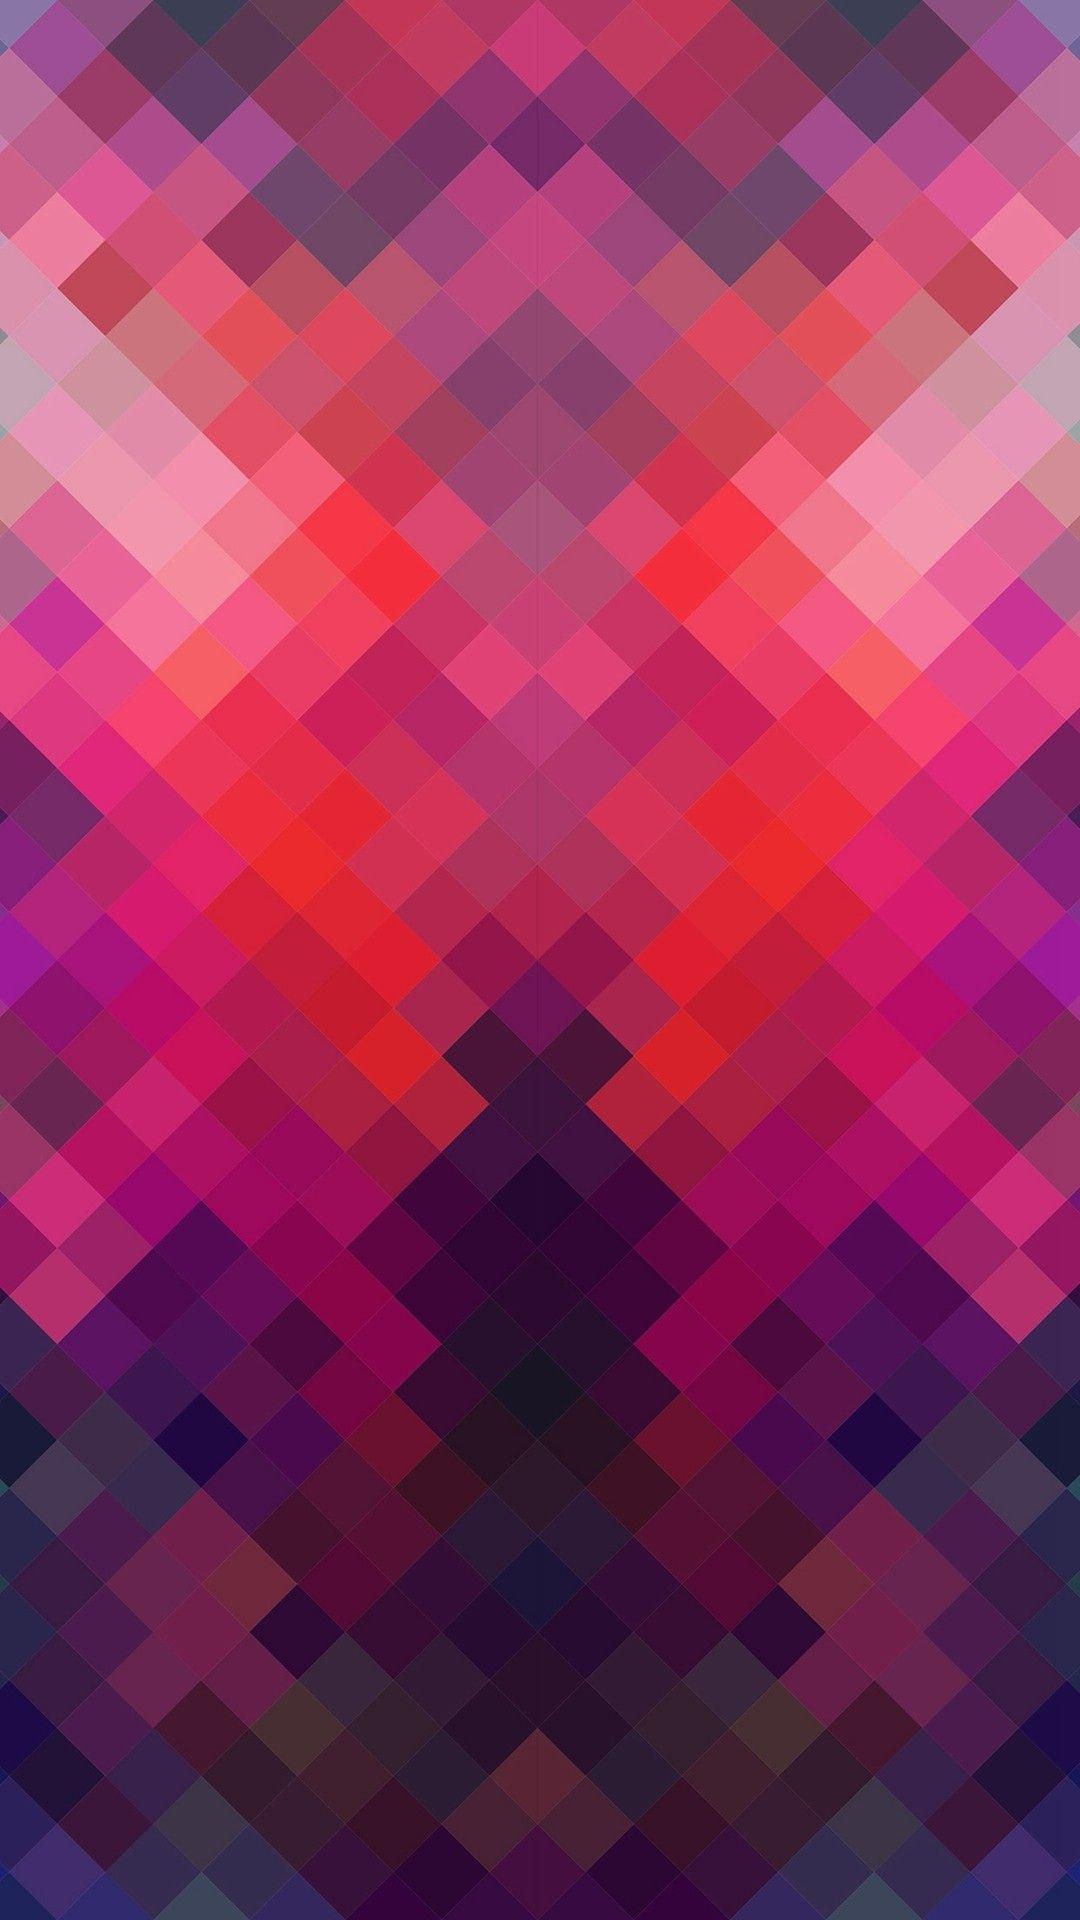 Geometric Art iPhone Wallpapers - Top Free Geometric Art iPhone ...